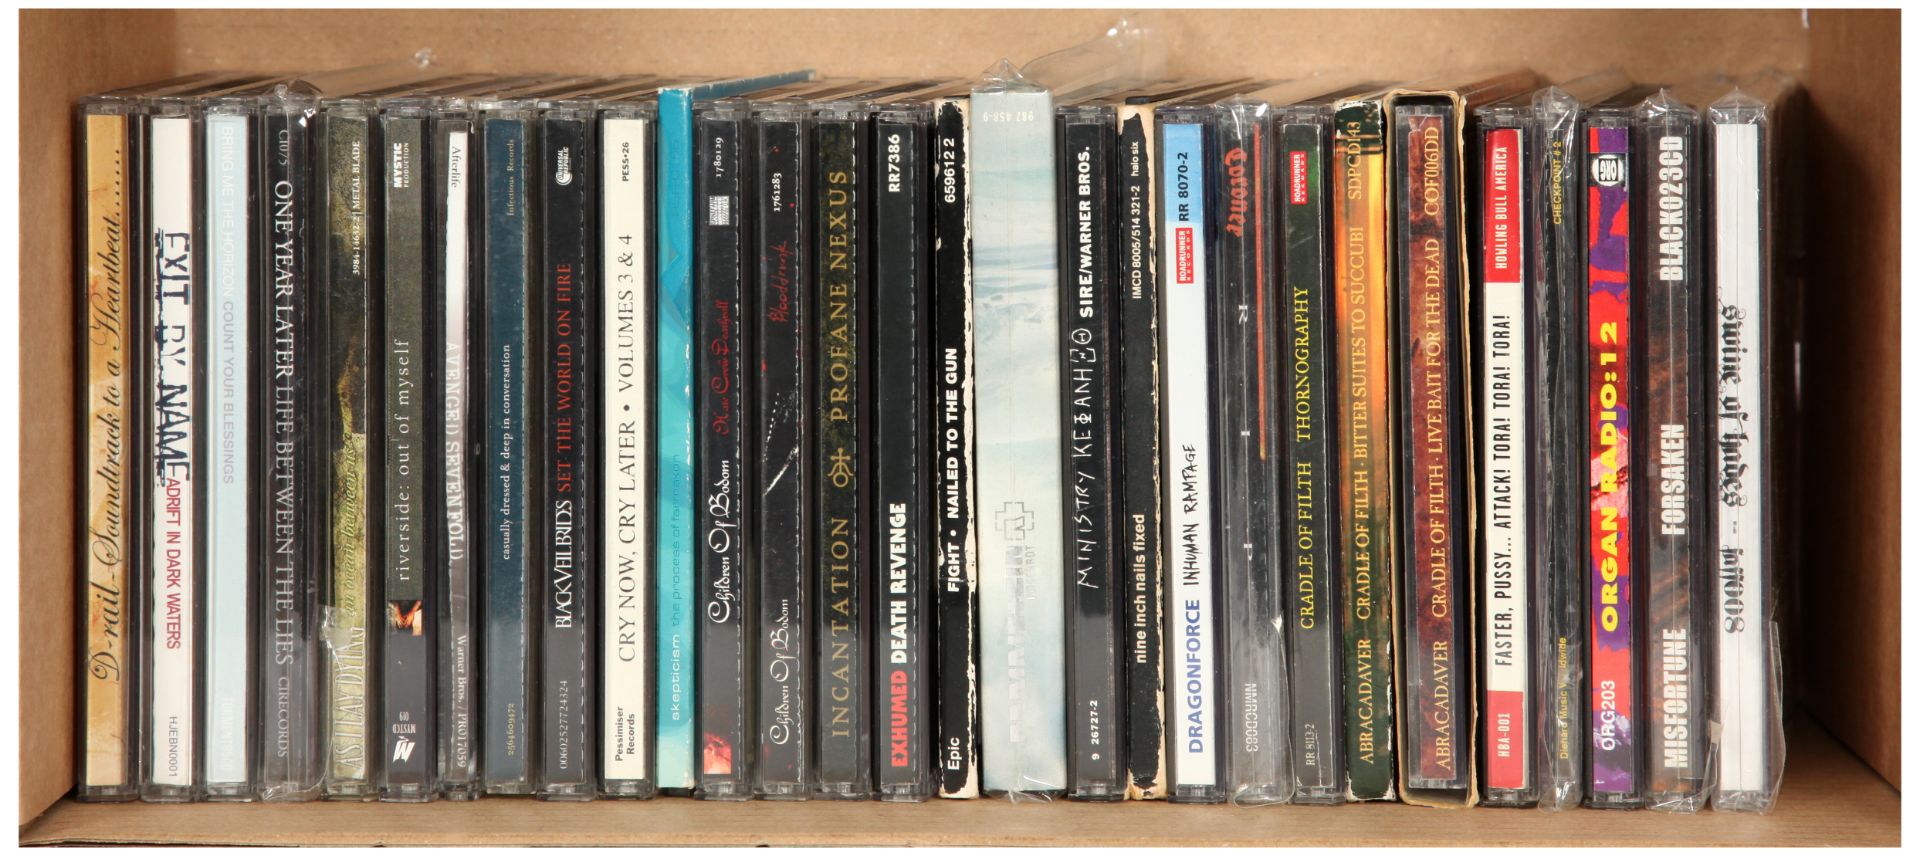 Mixed Metal Genre CDs